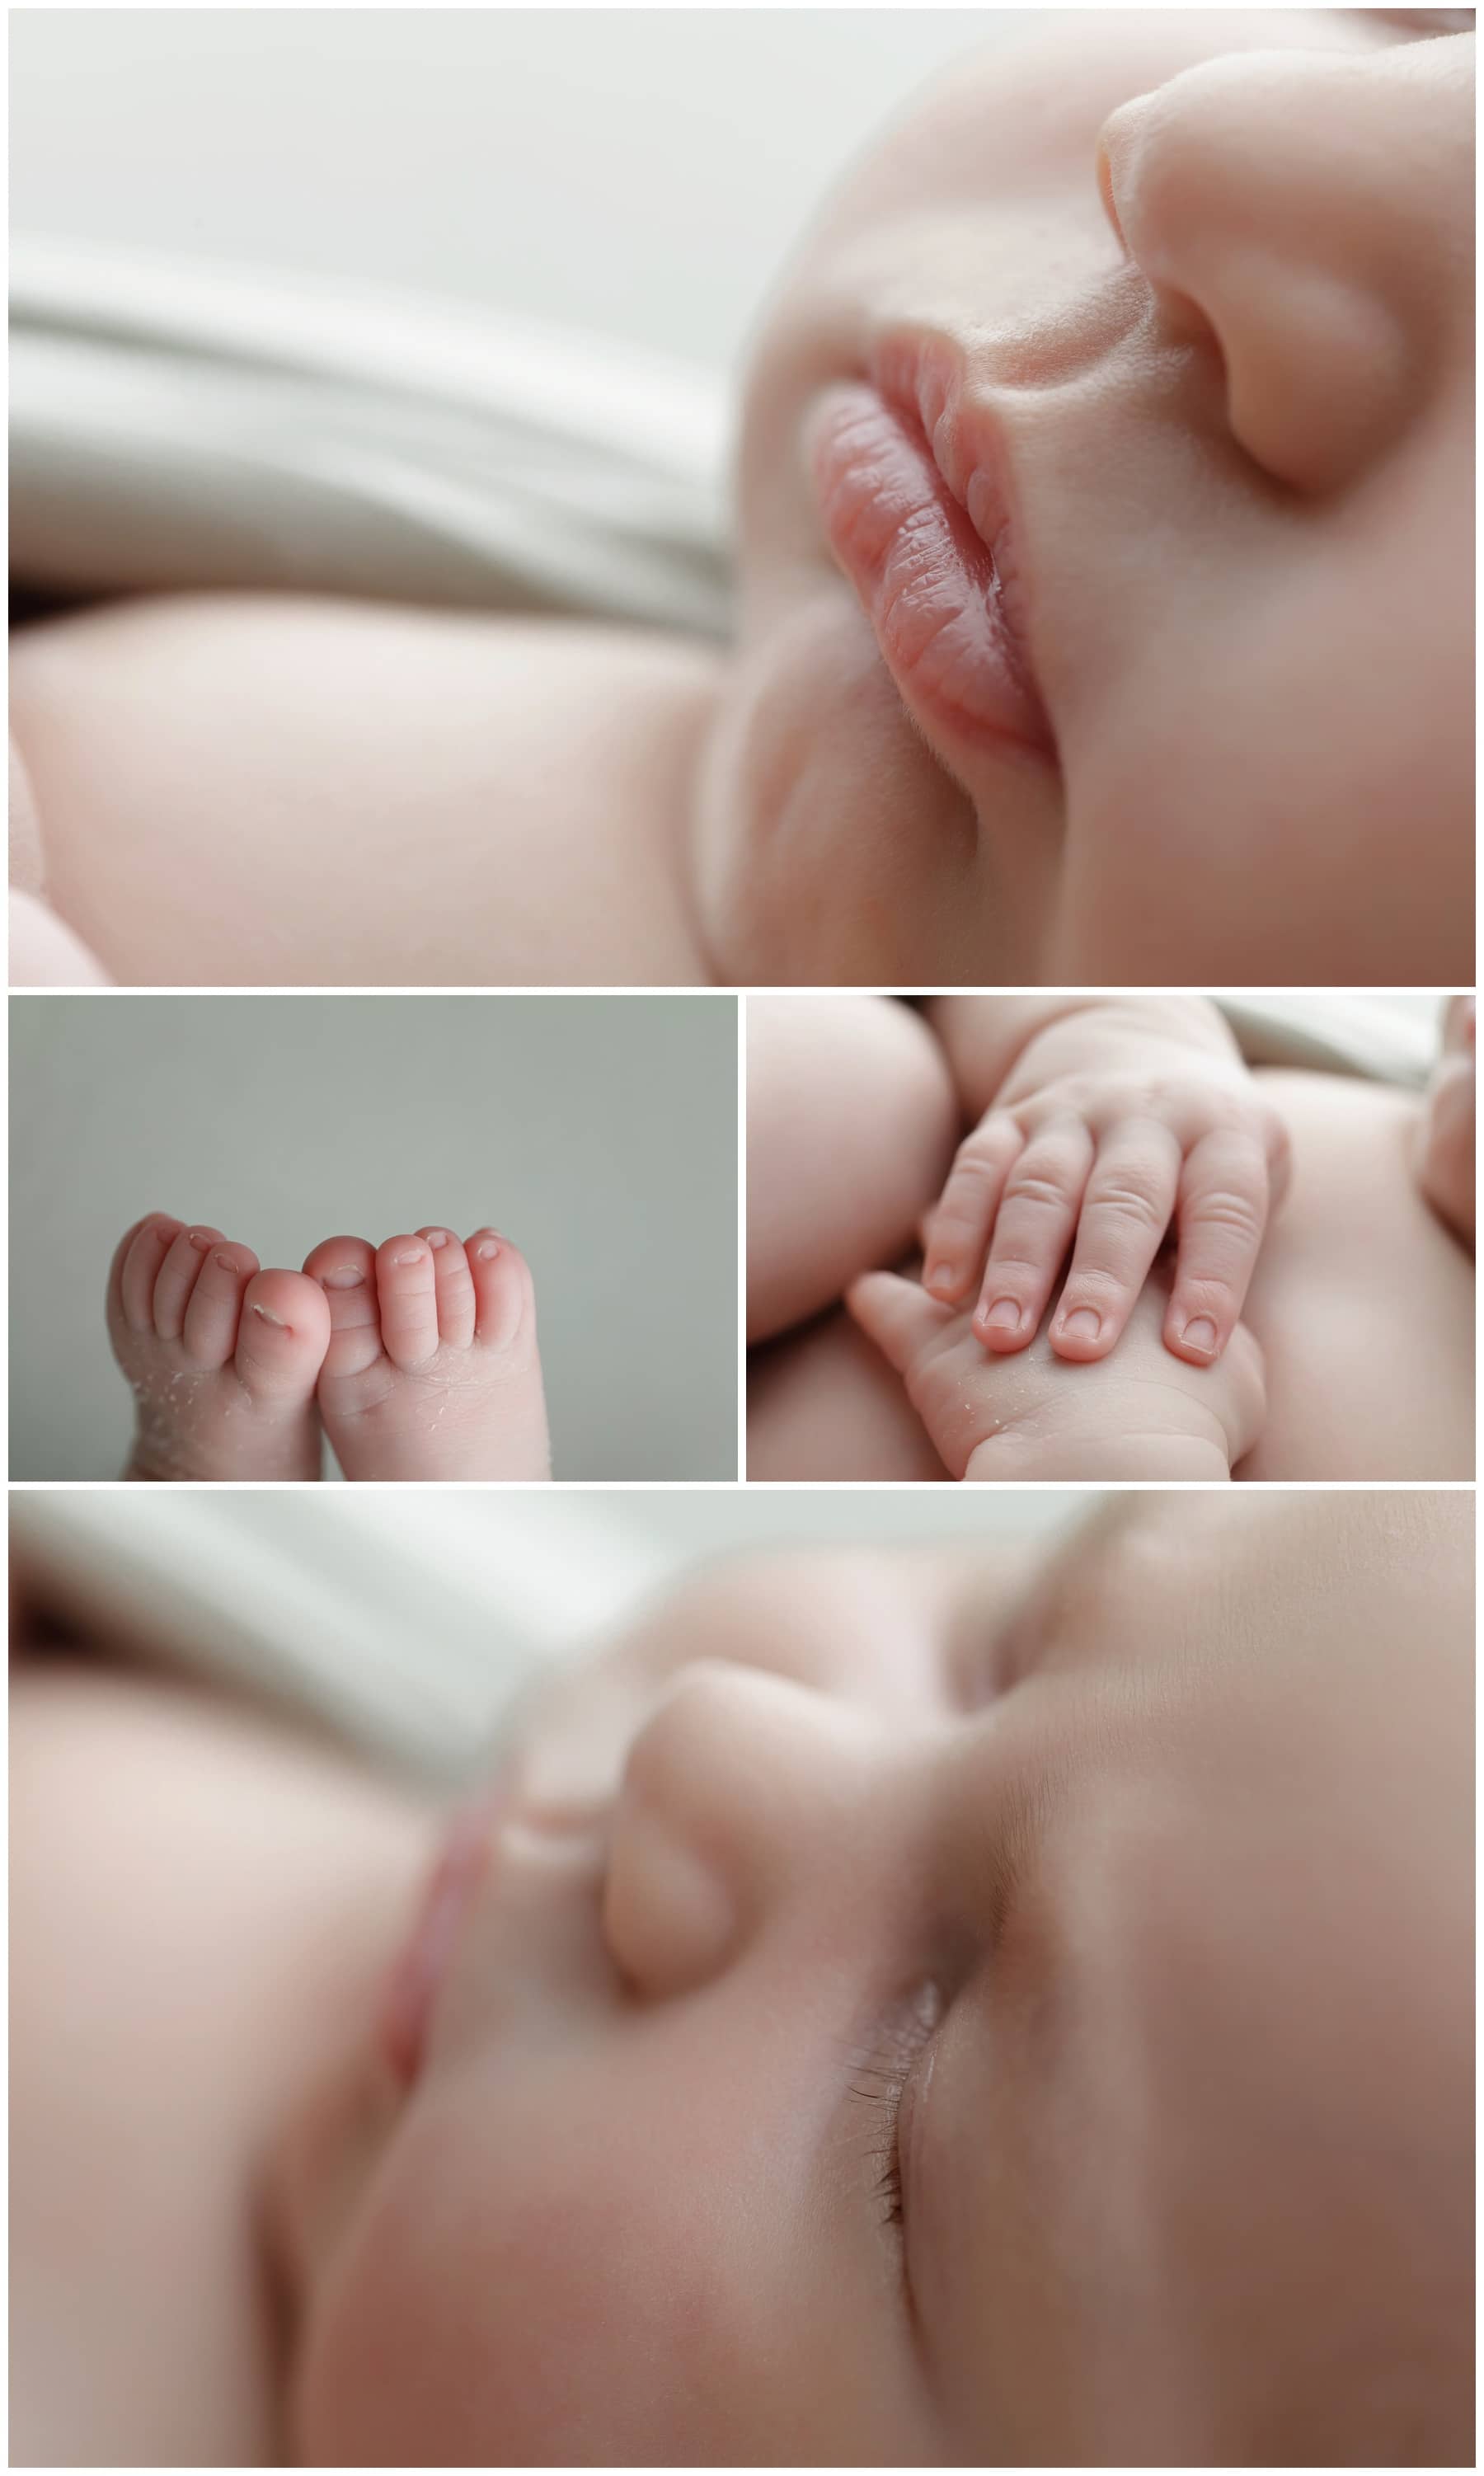 Jax Baby Photographer | 8.08 Photography | www.808photographyjax.com